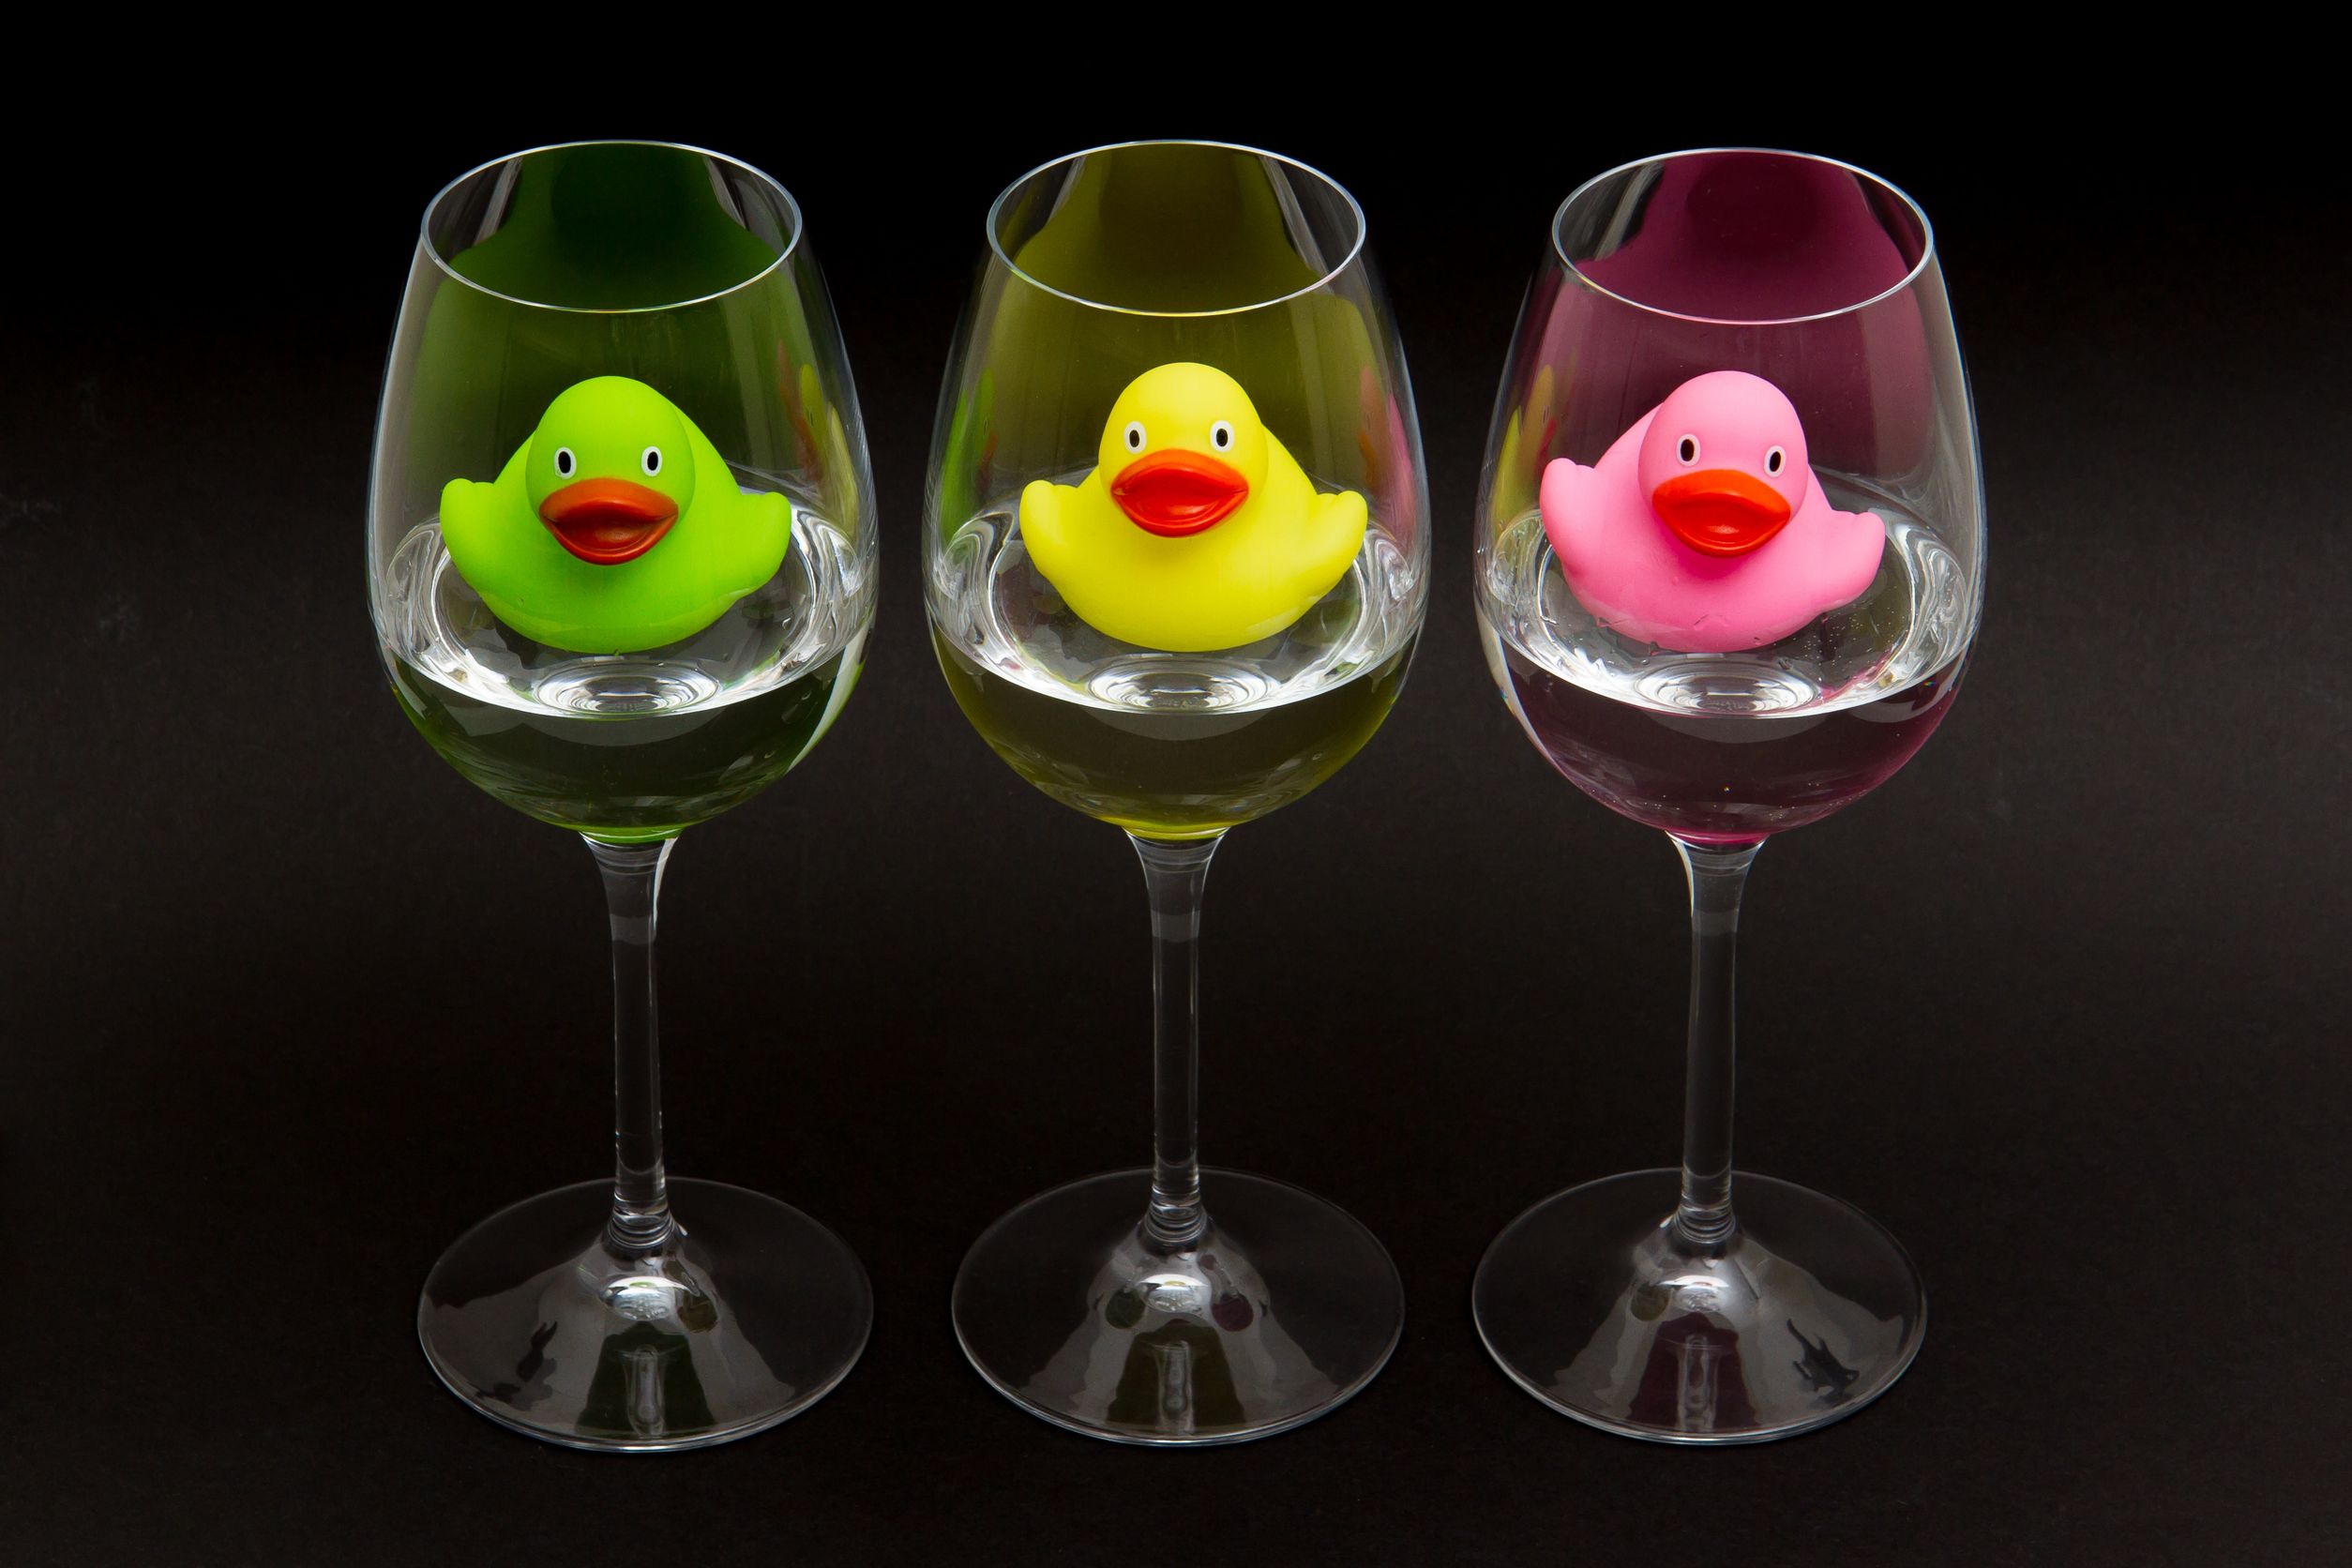 ducks in wineglasses - alcohol free